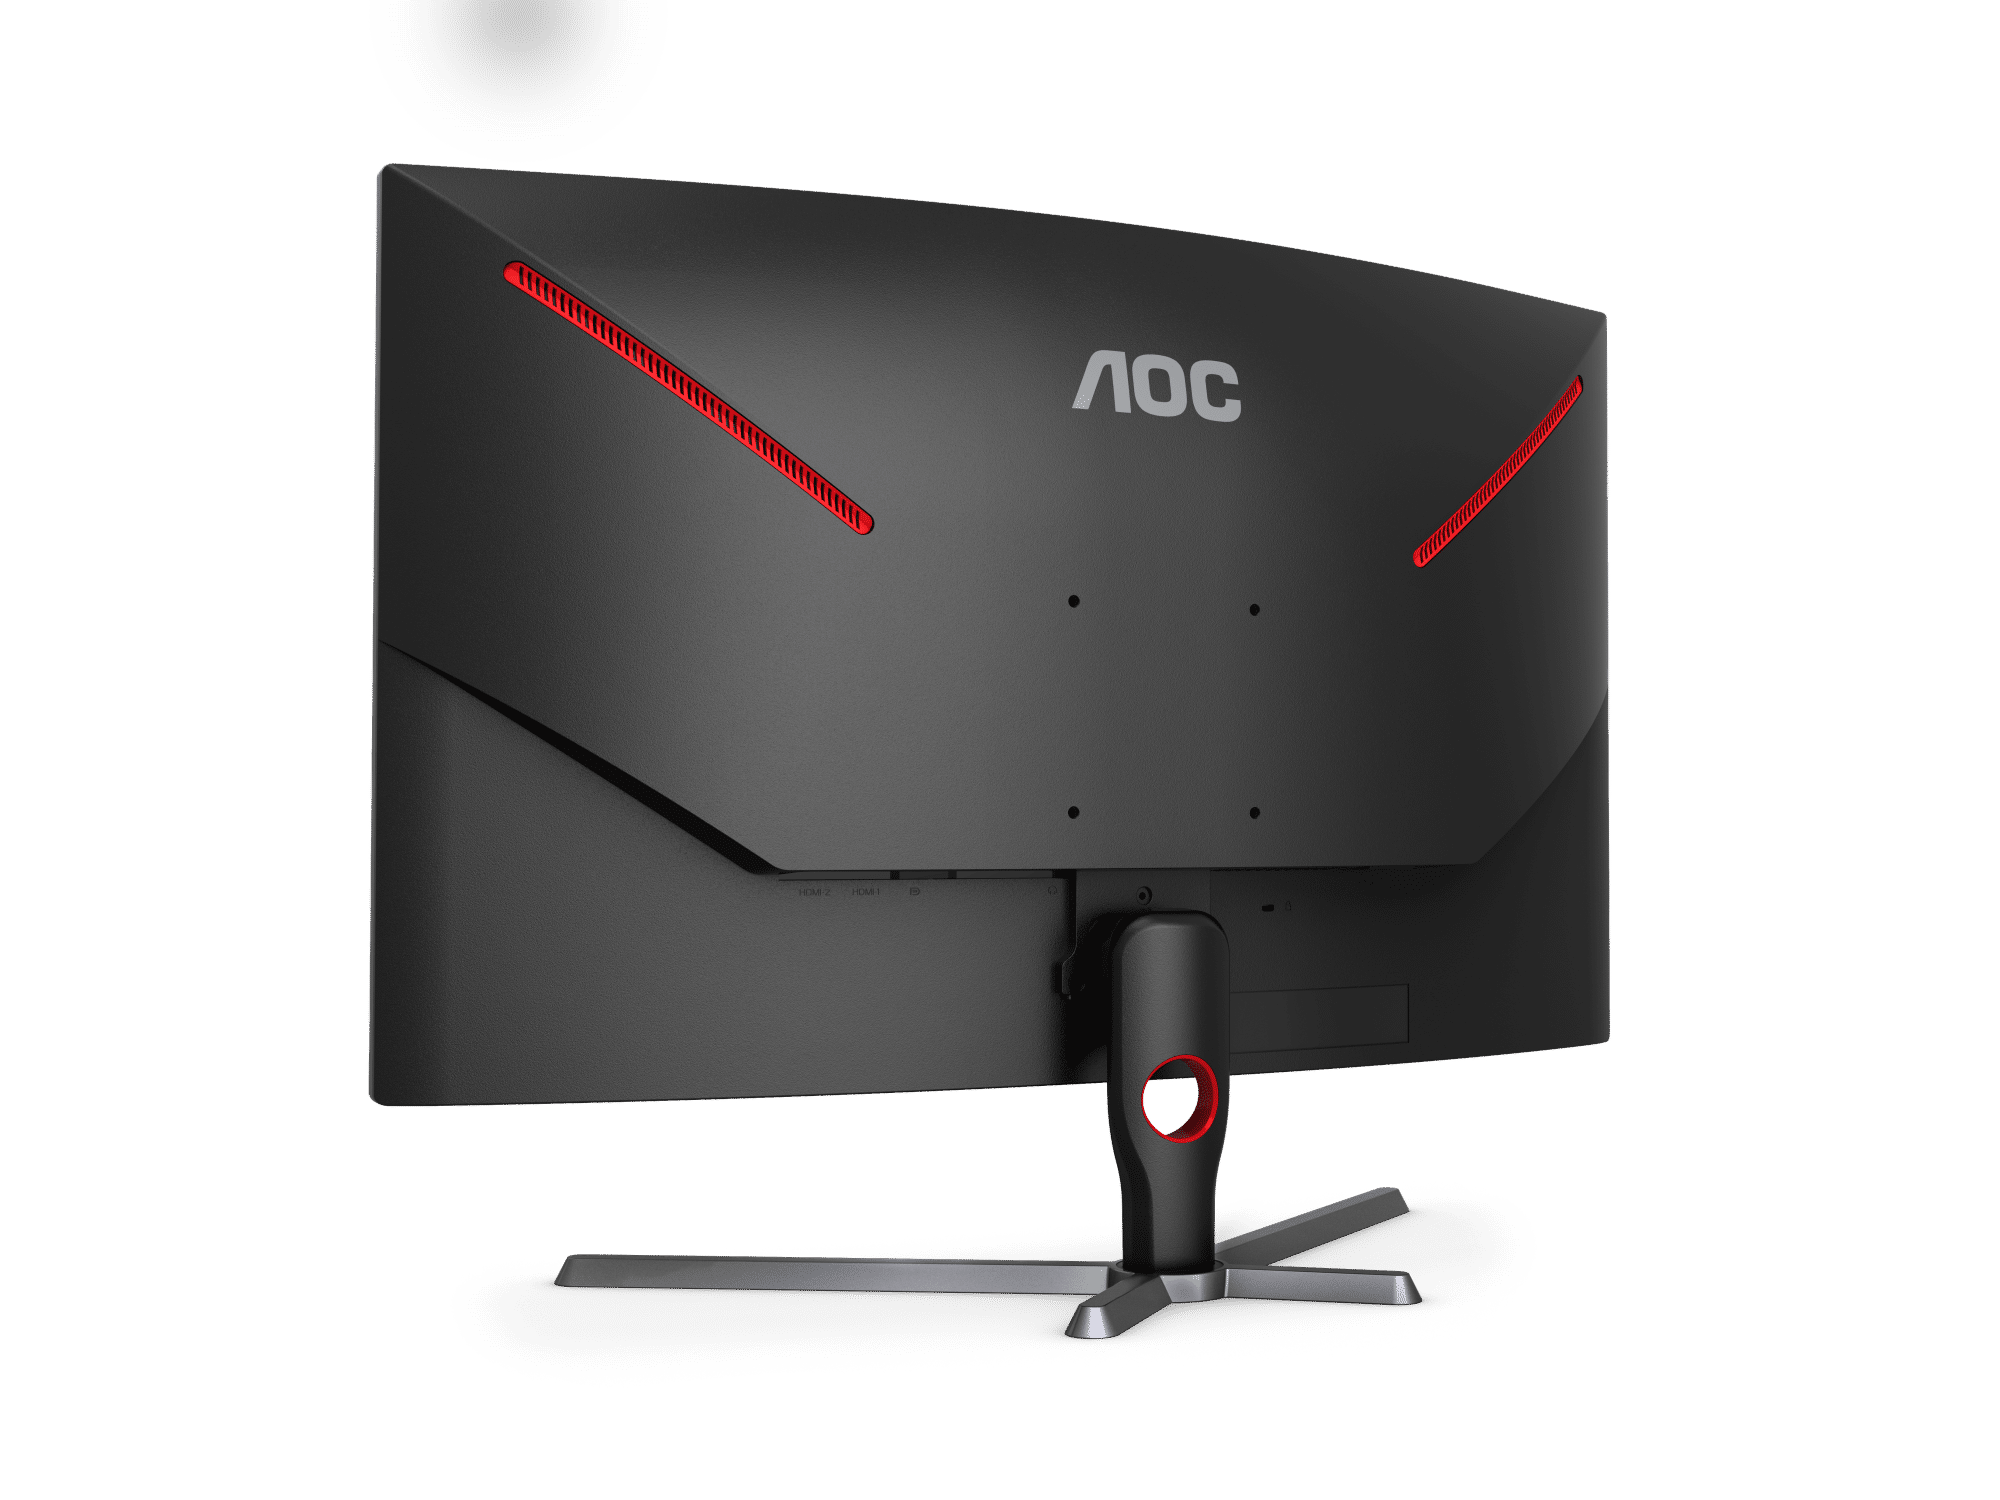 AOC CQ32G3SE 31.5" Gaming Monitor